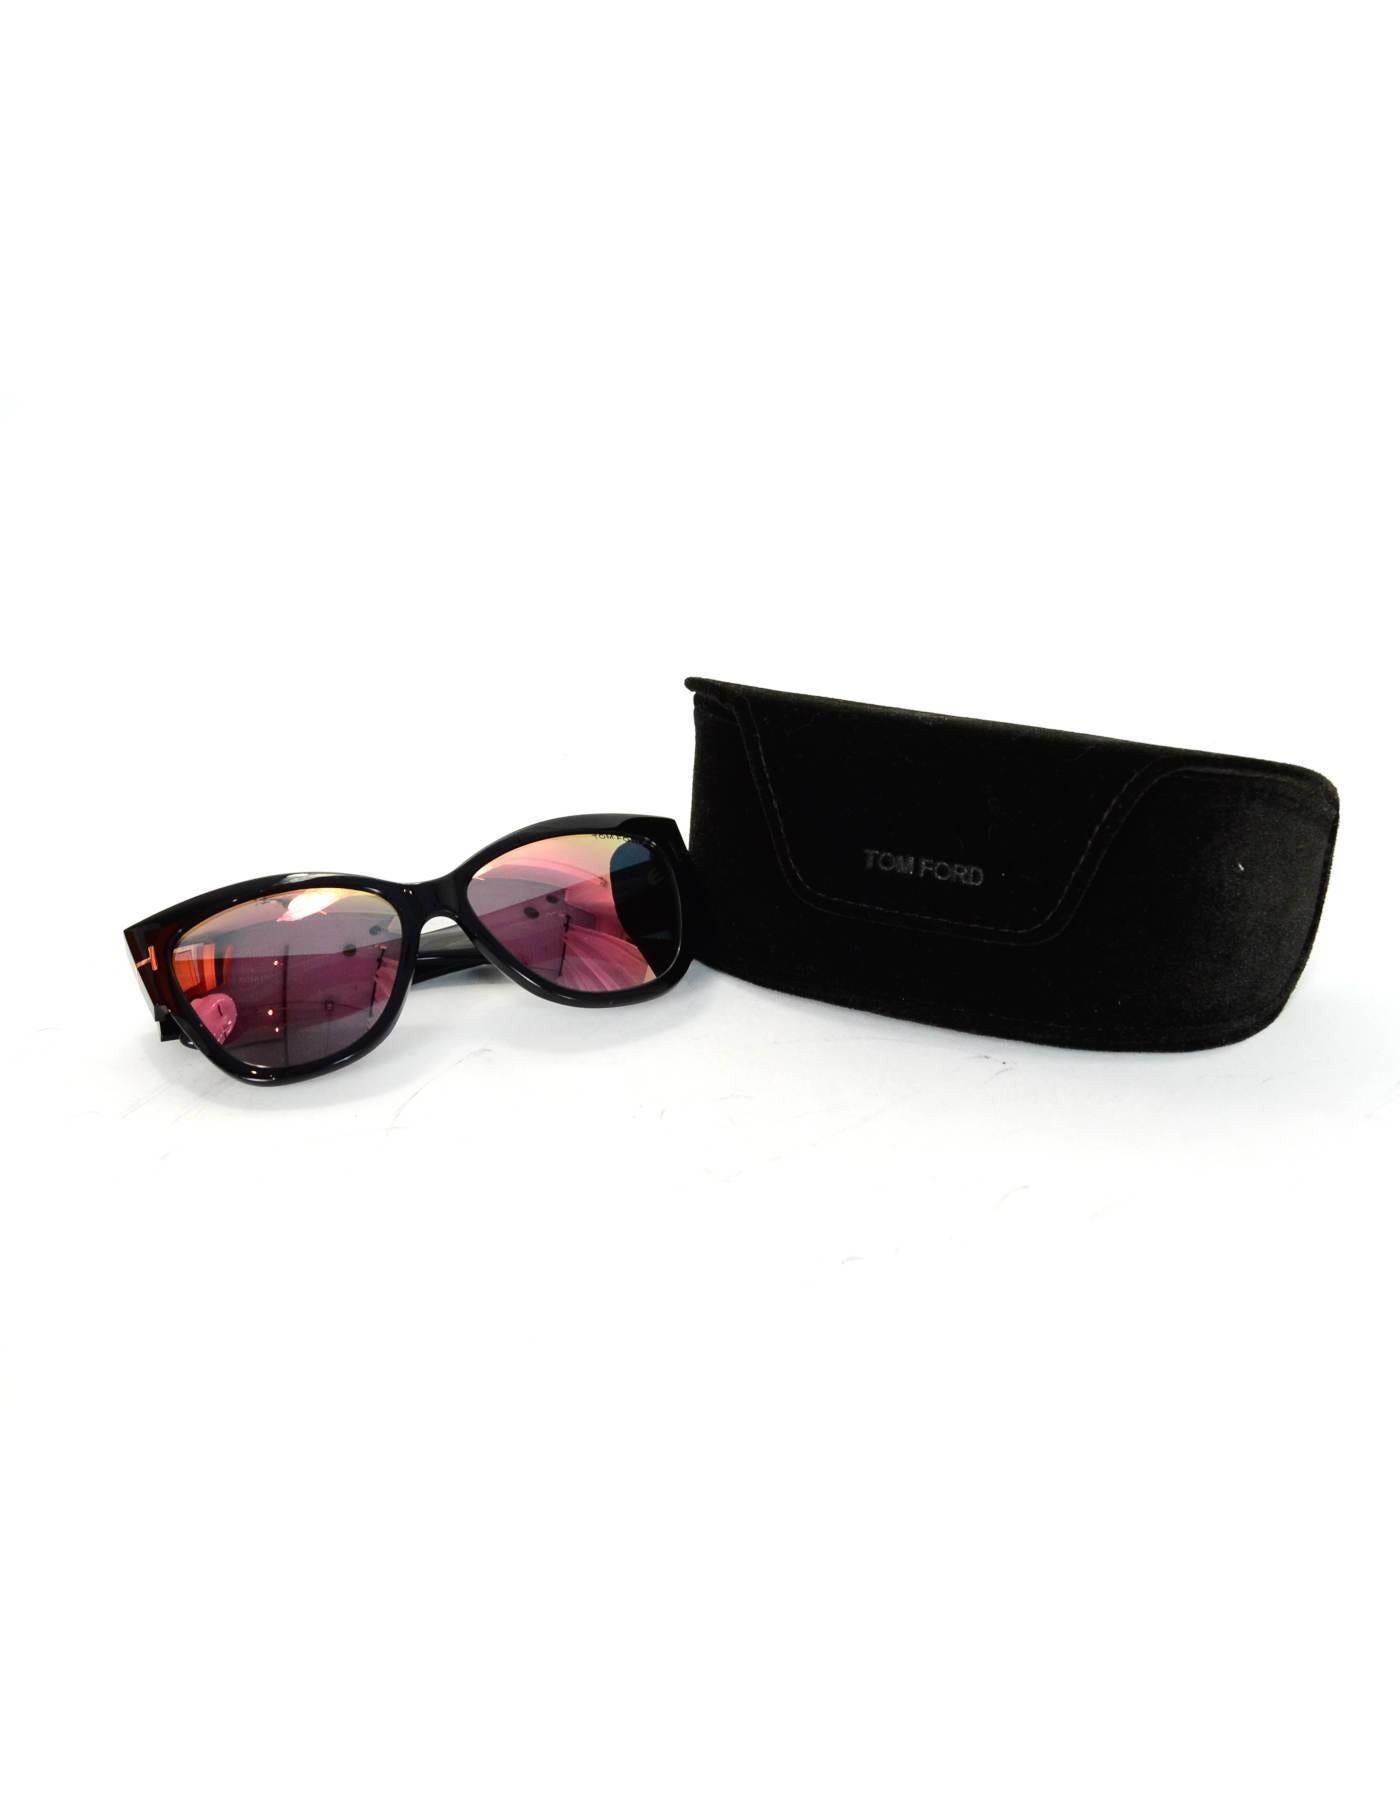 Tom Ford Black Anoushka Cat-Eye Mirrored Lens Sunglasses with Case rt. $445 4